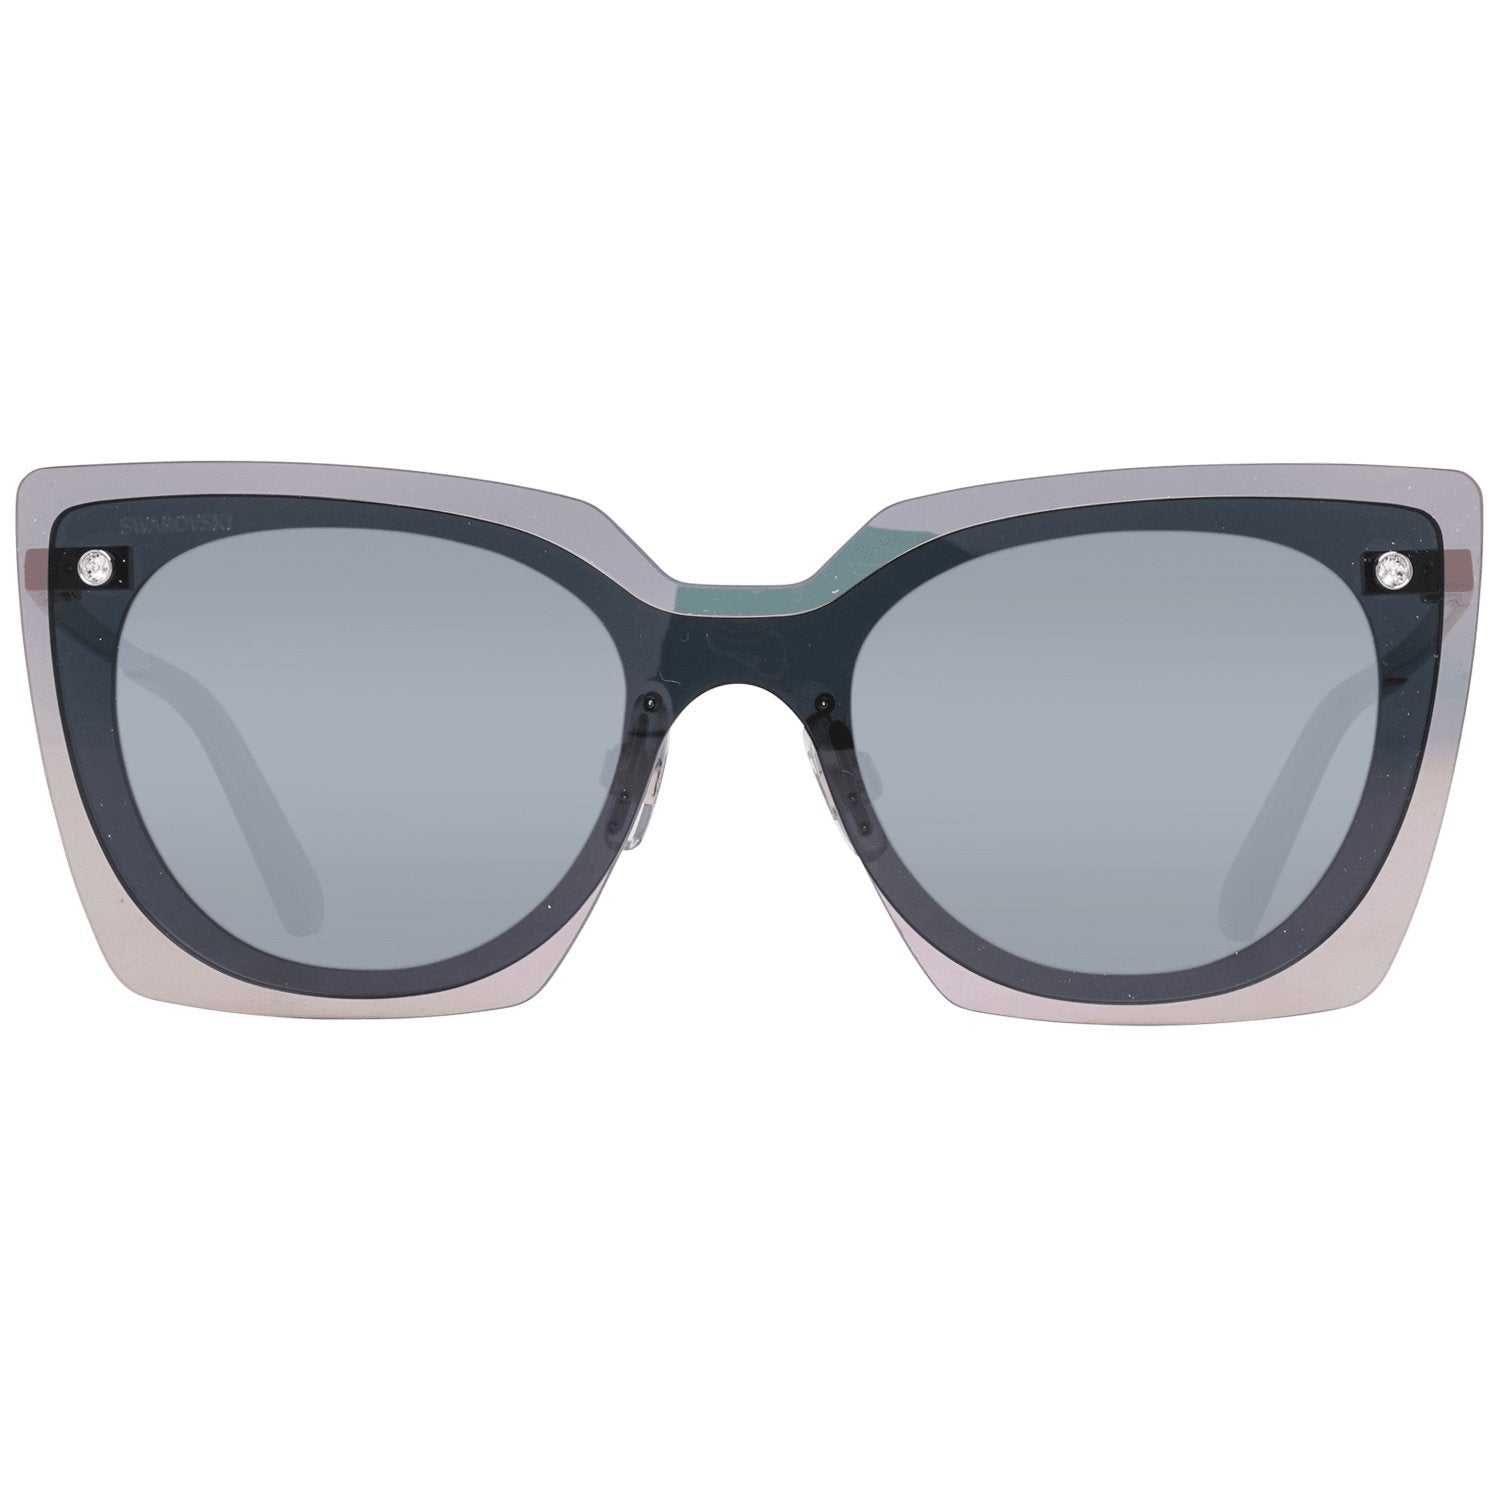 Swarovski Black Sunglasses for Woman - Fizigo